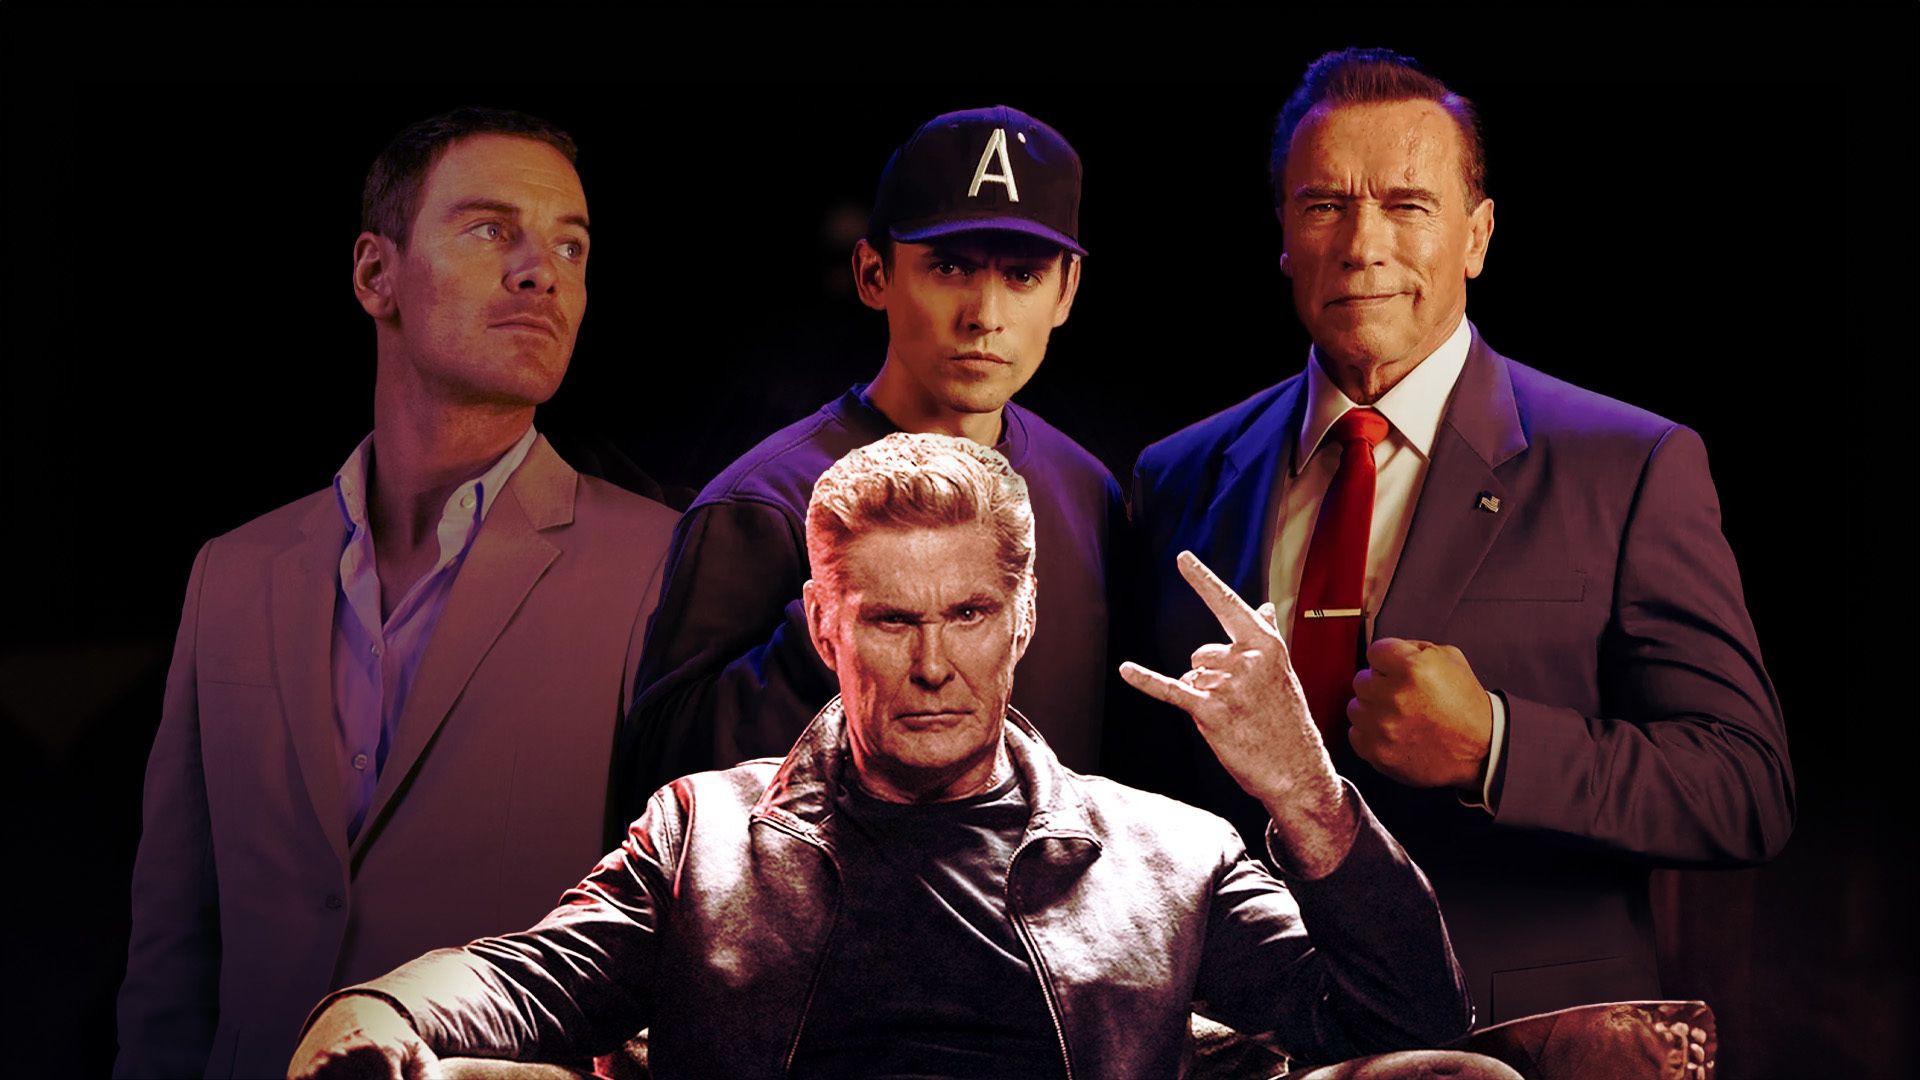 Kung Fury cast with David Sandberg, Michael Fassbender, Arnold Schwarzenegger, and David Hasselhoff